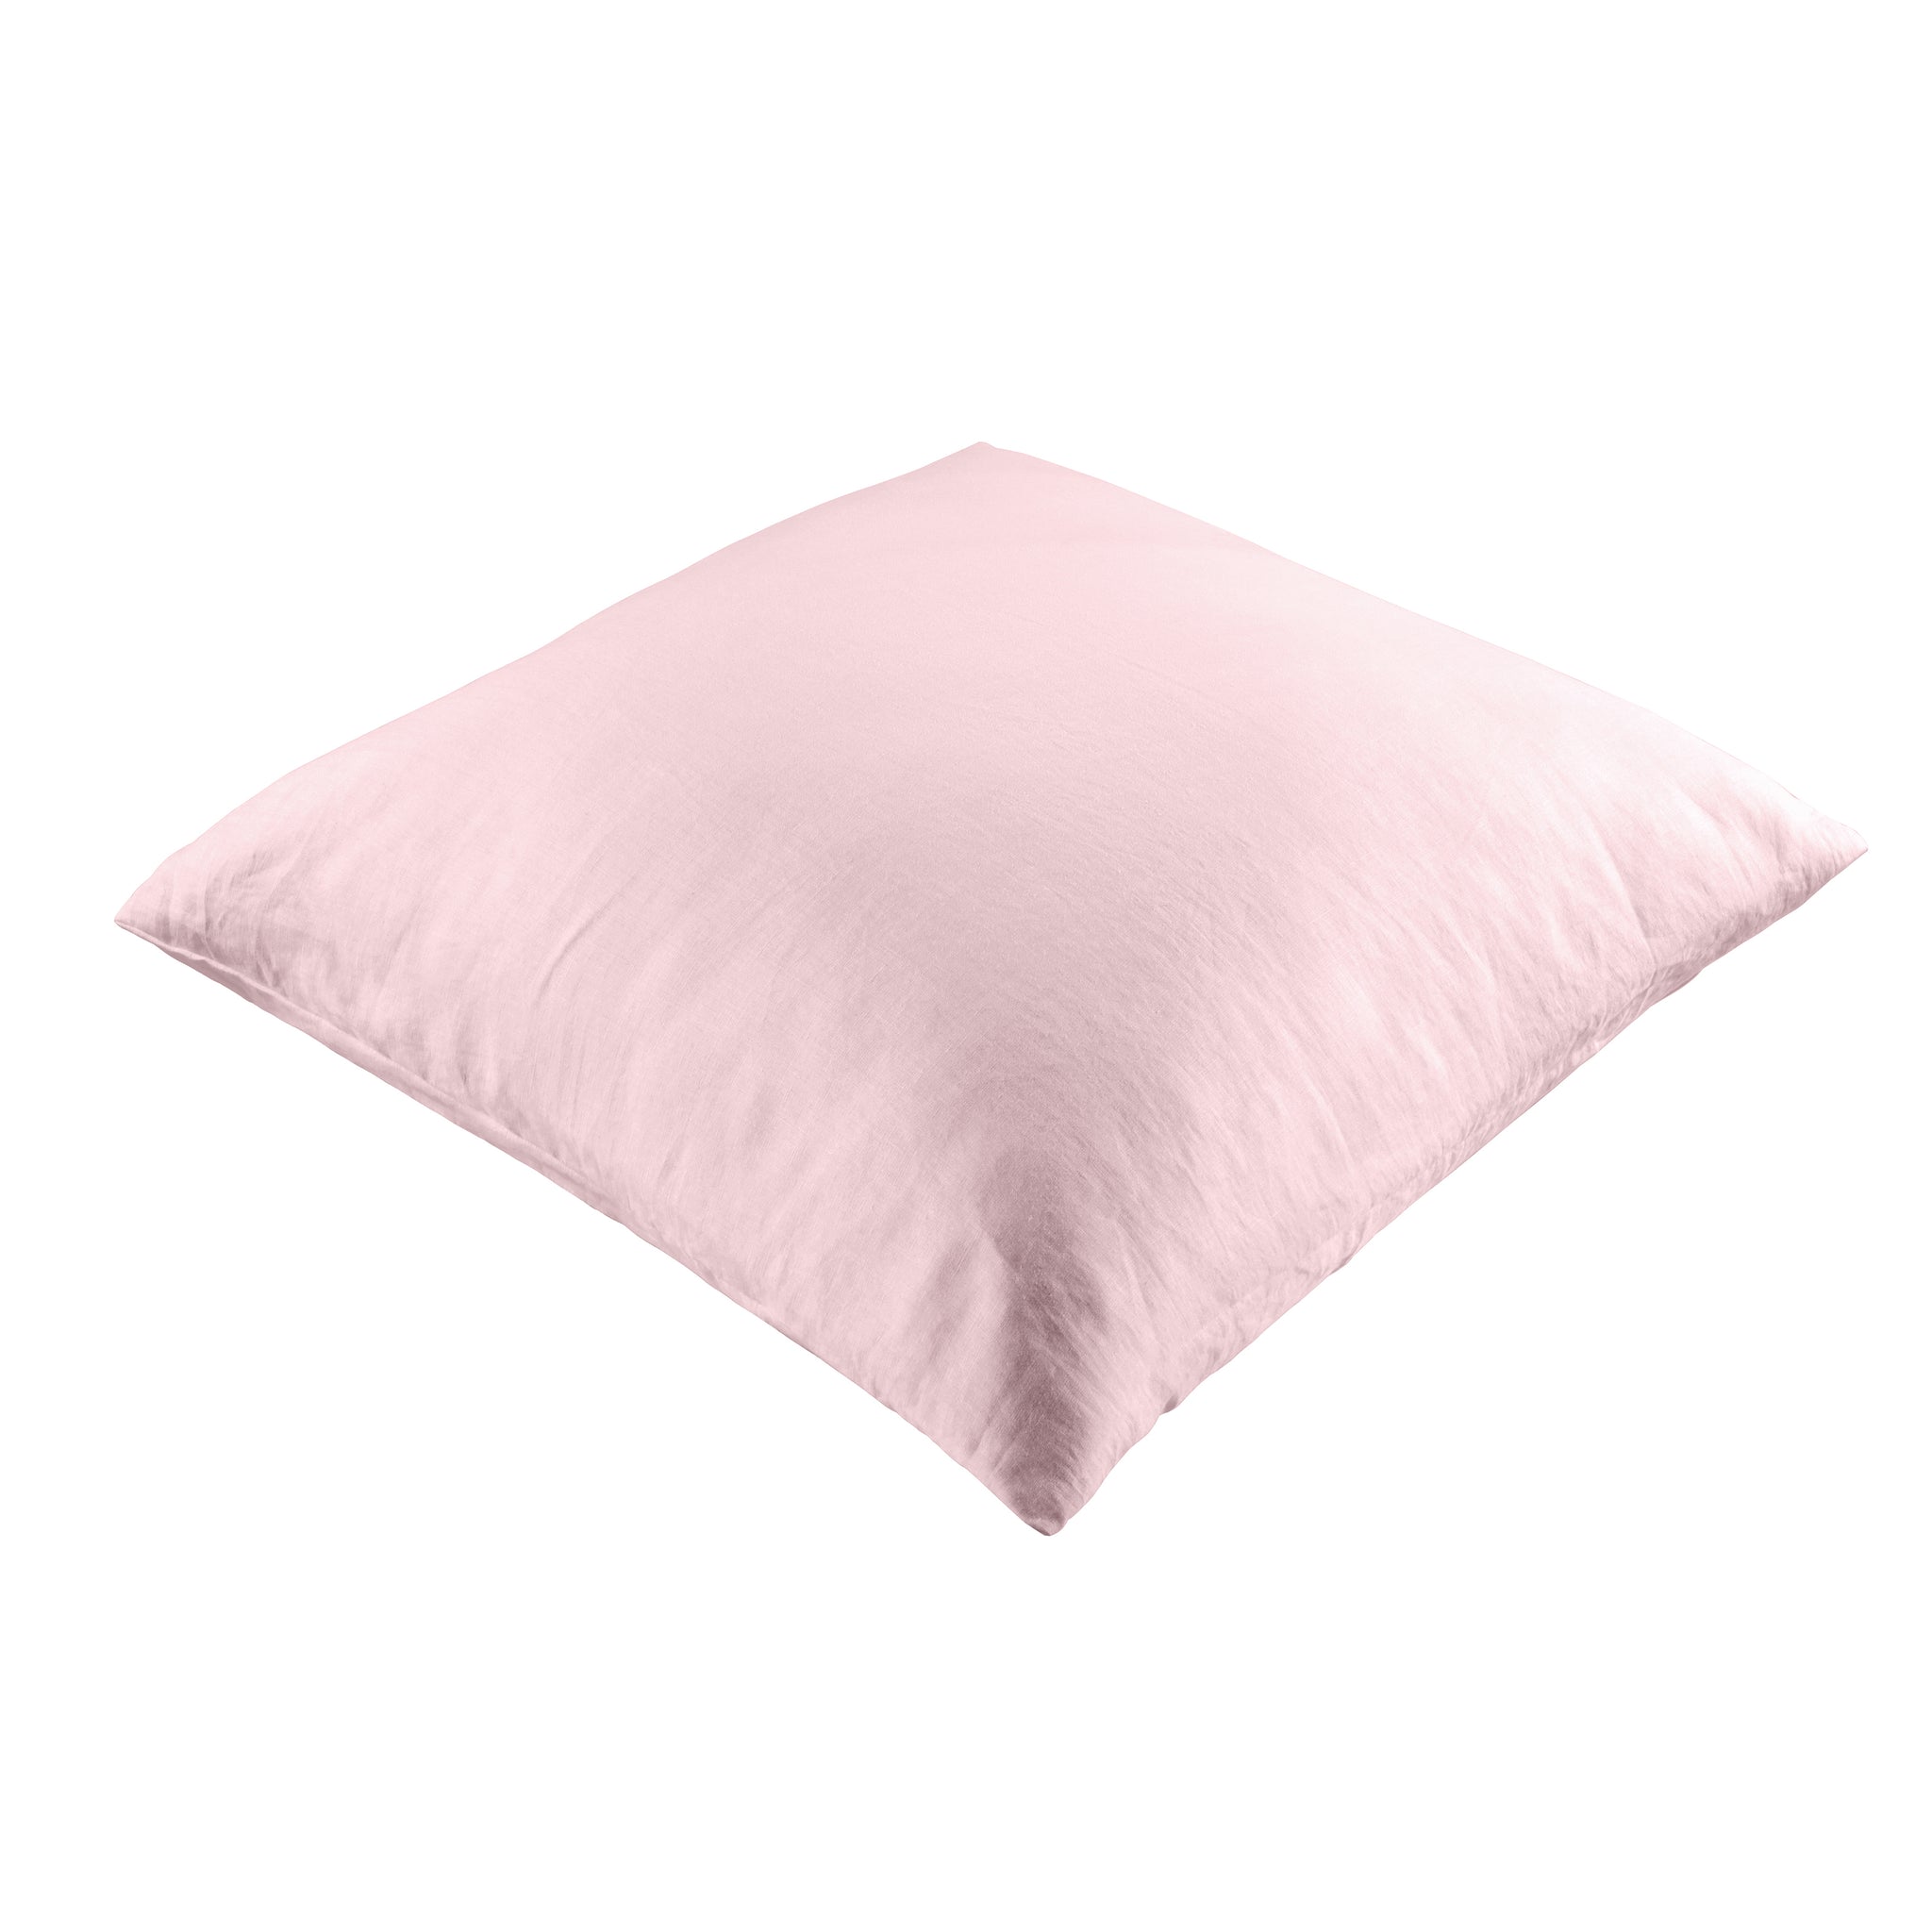 Blush Pink - Pure Linen - European Pillowcase